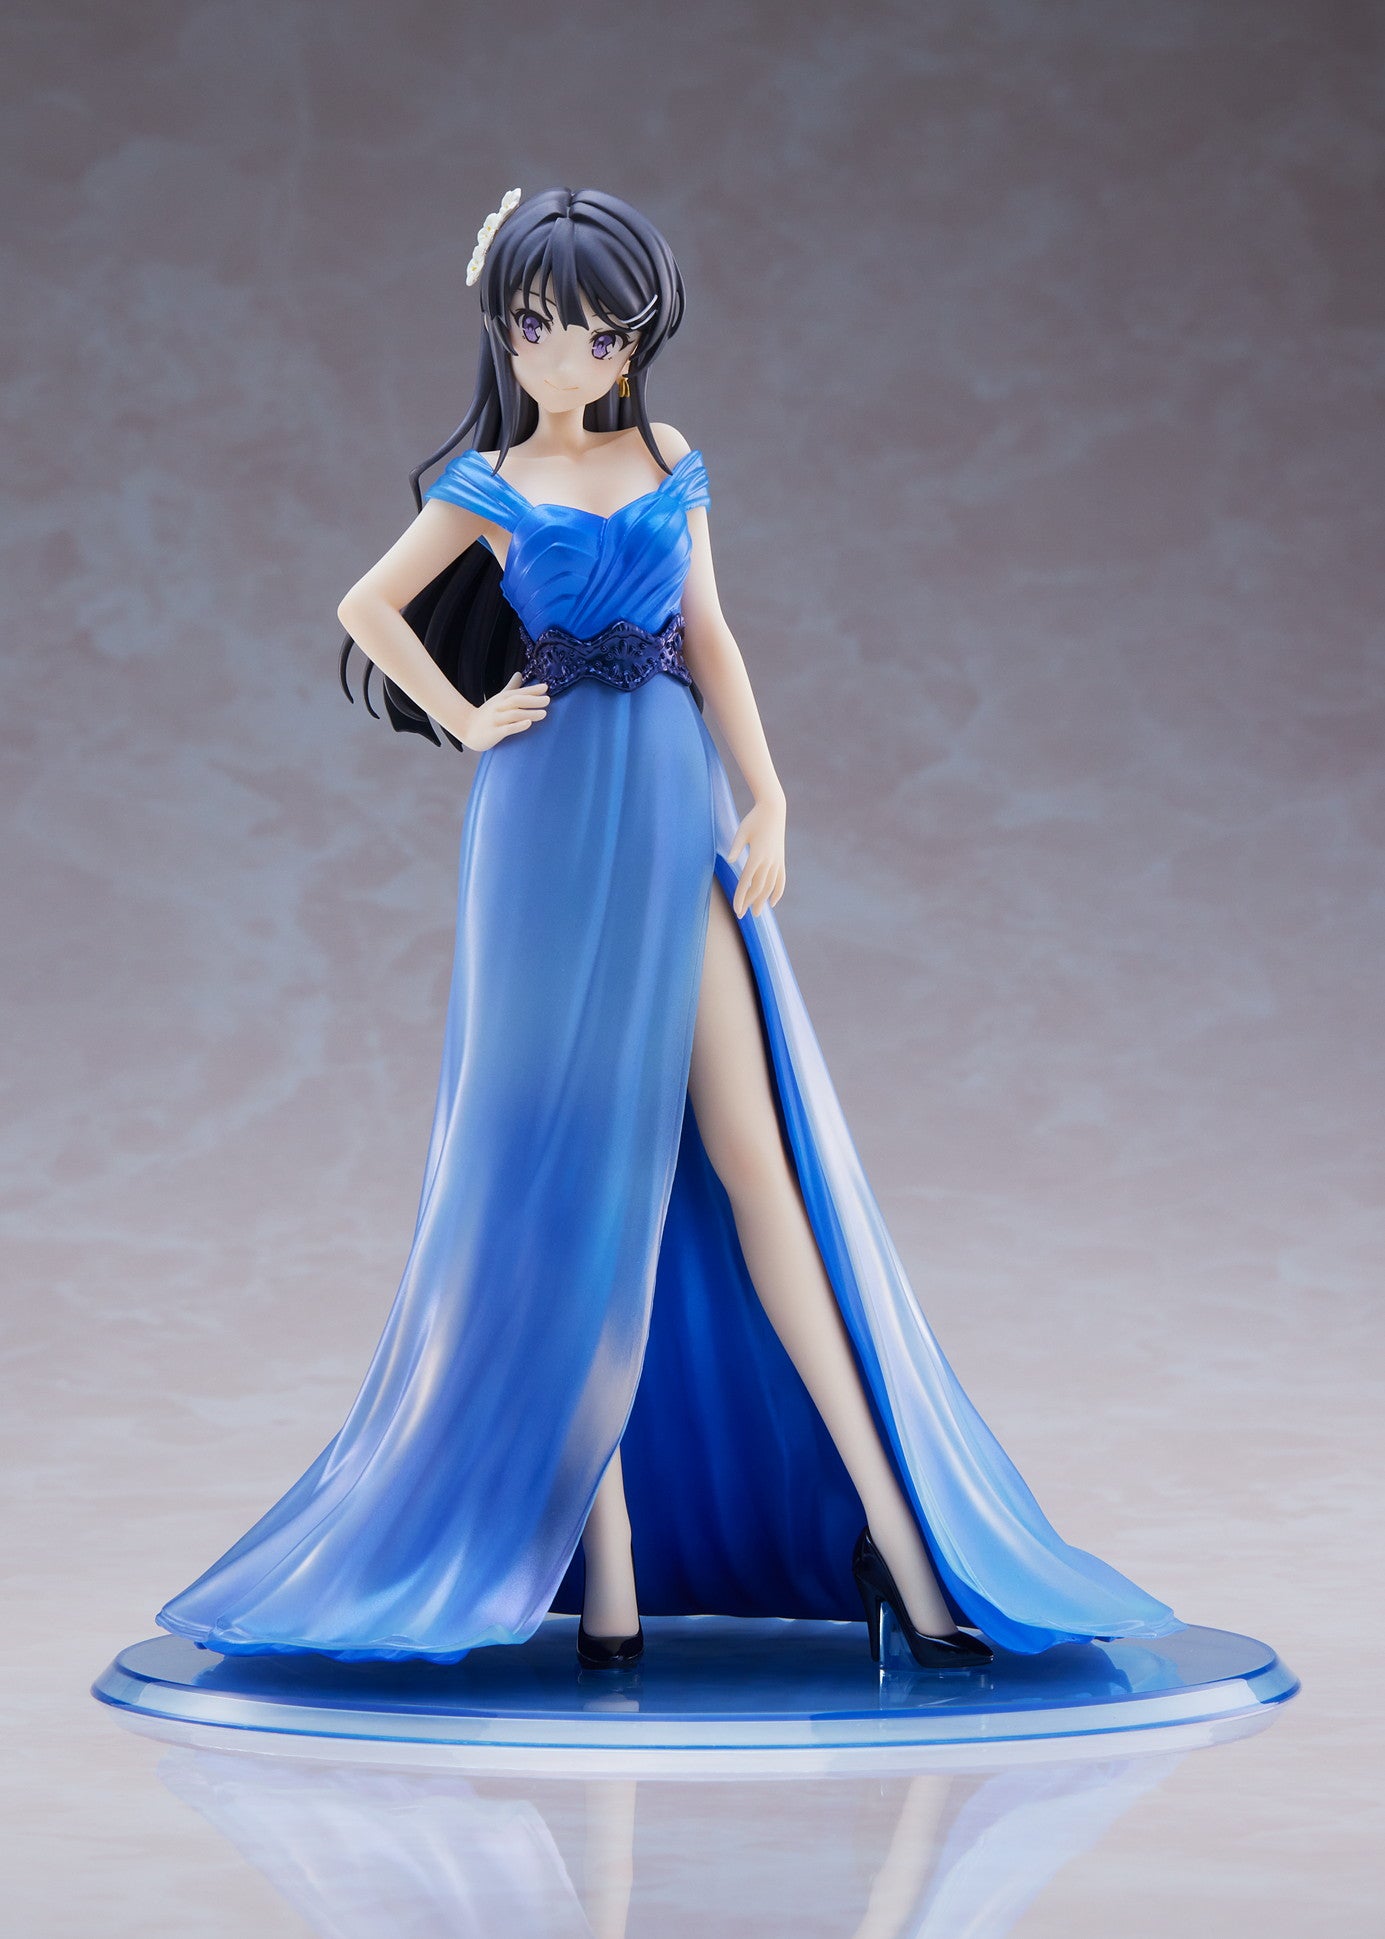 Rascal Does Not Dream of Bunny Girl Senpai - Mai Sakurajima Figure (Blue Wedding Dress Ver.) image count 2